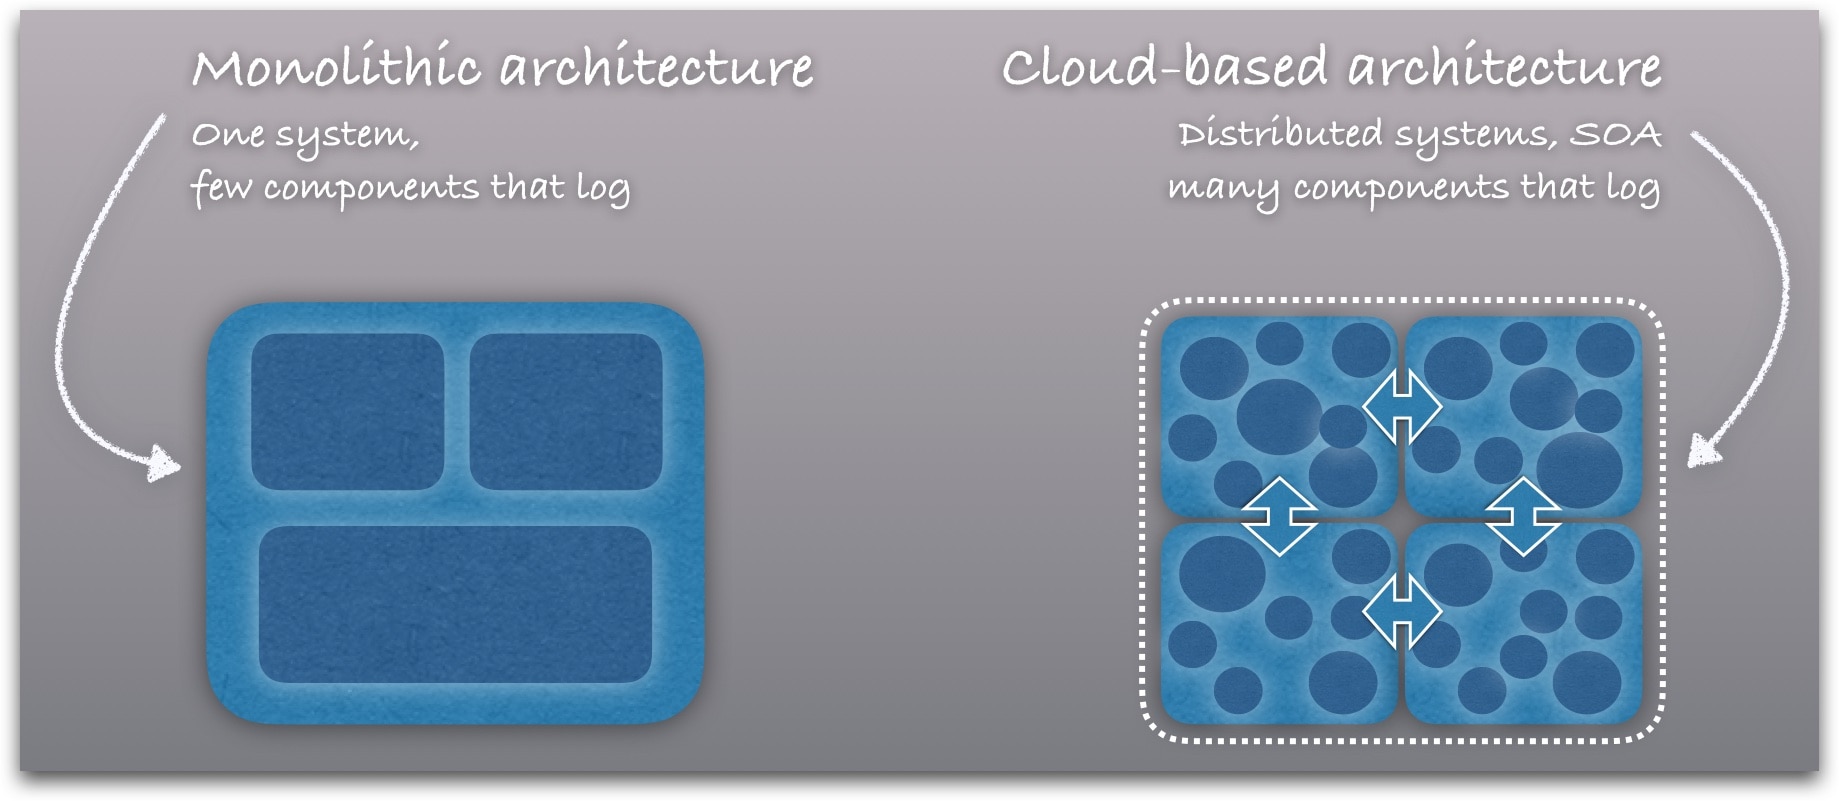 Monolithic vs Cloud-based architecture